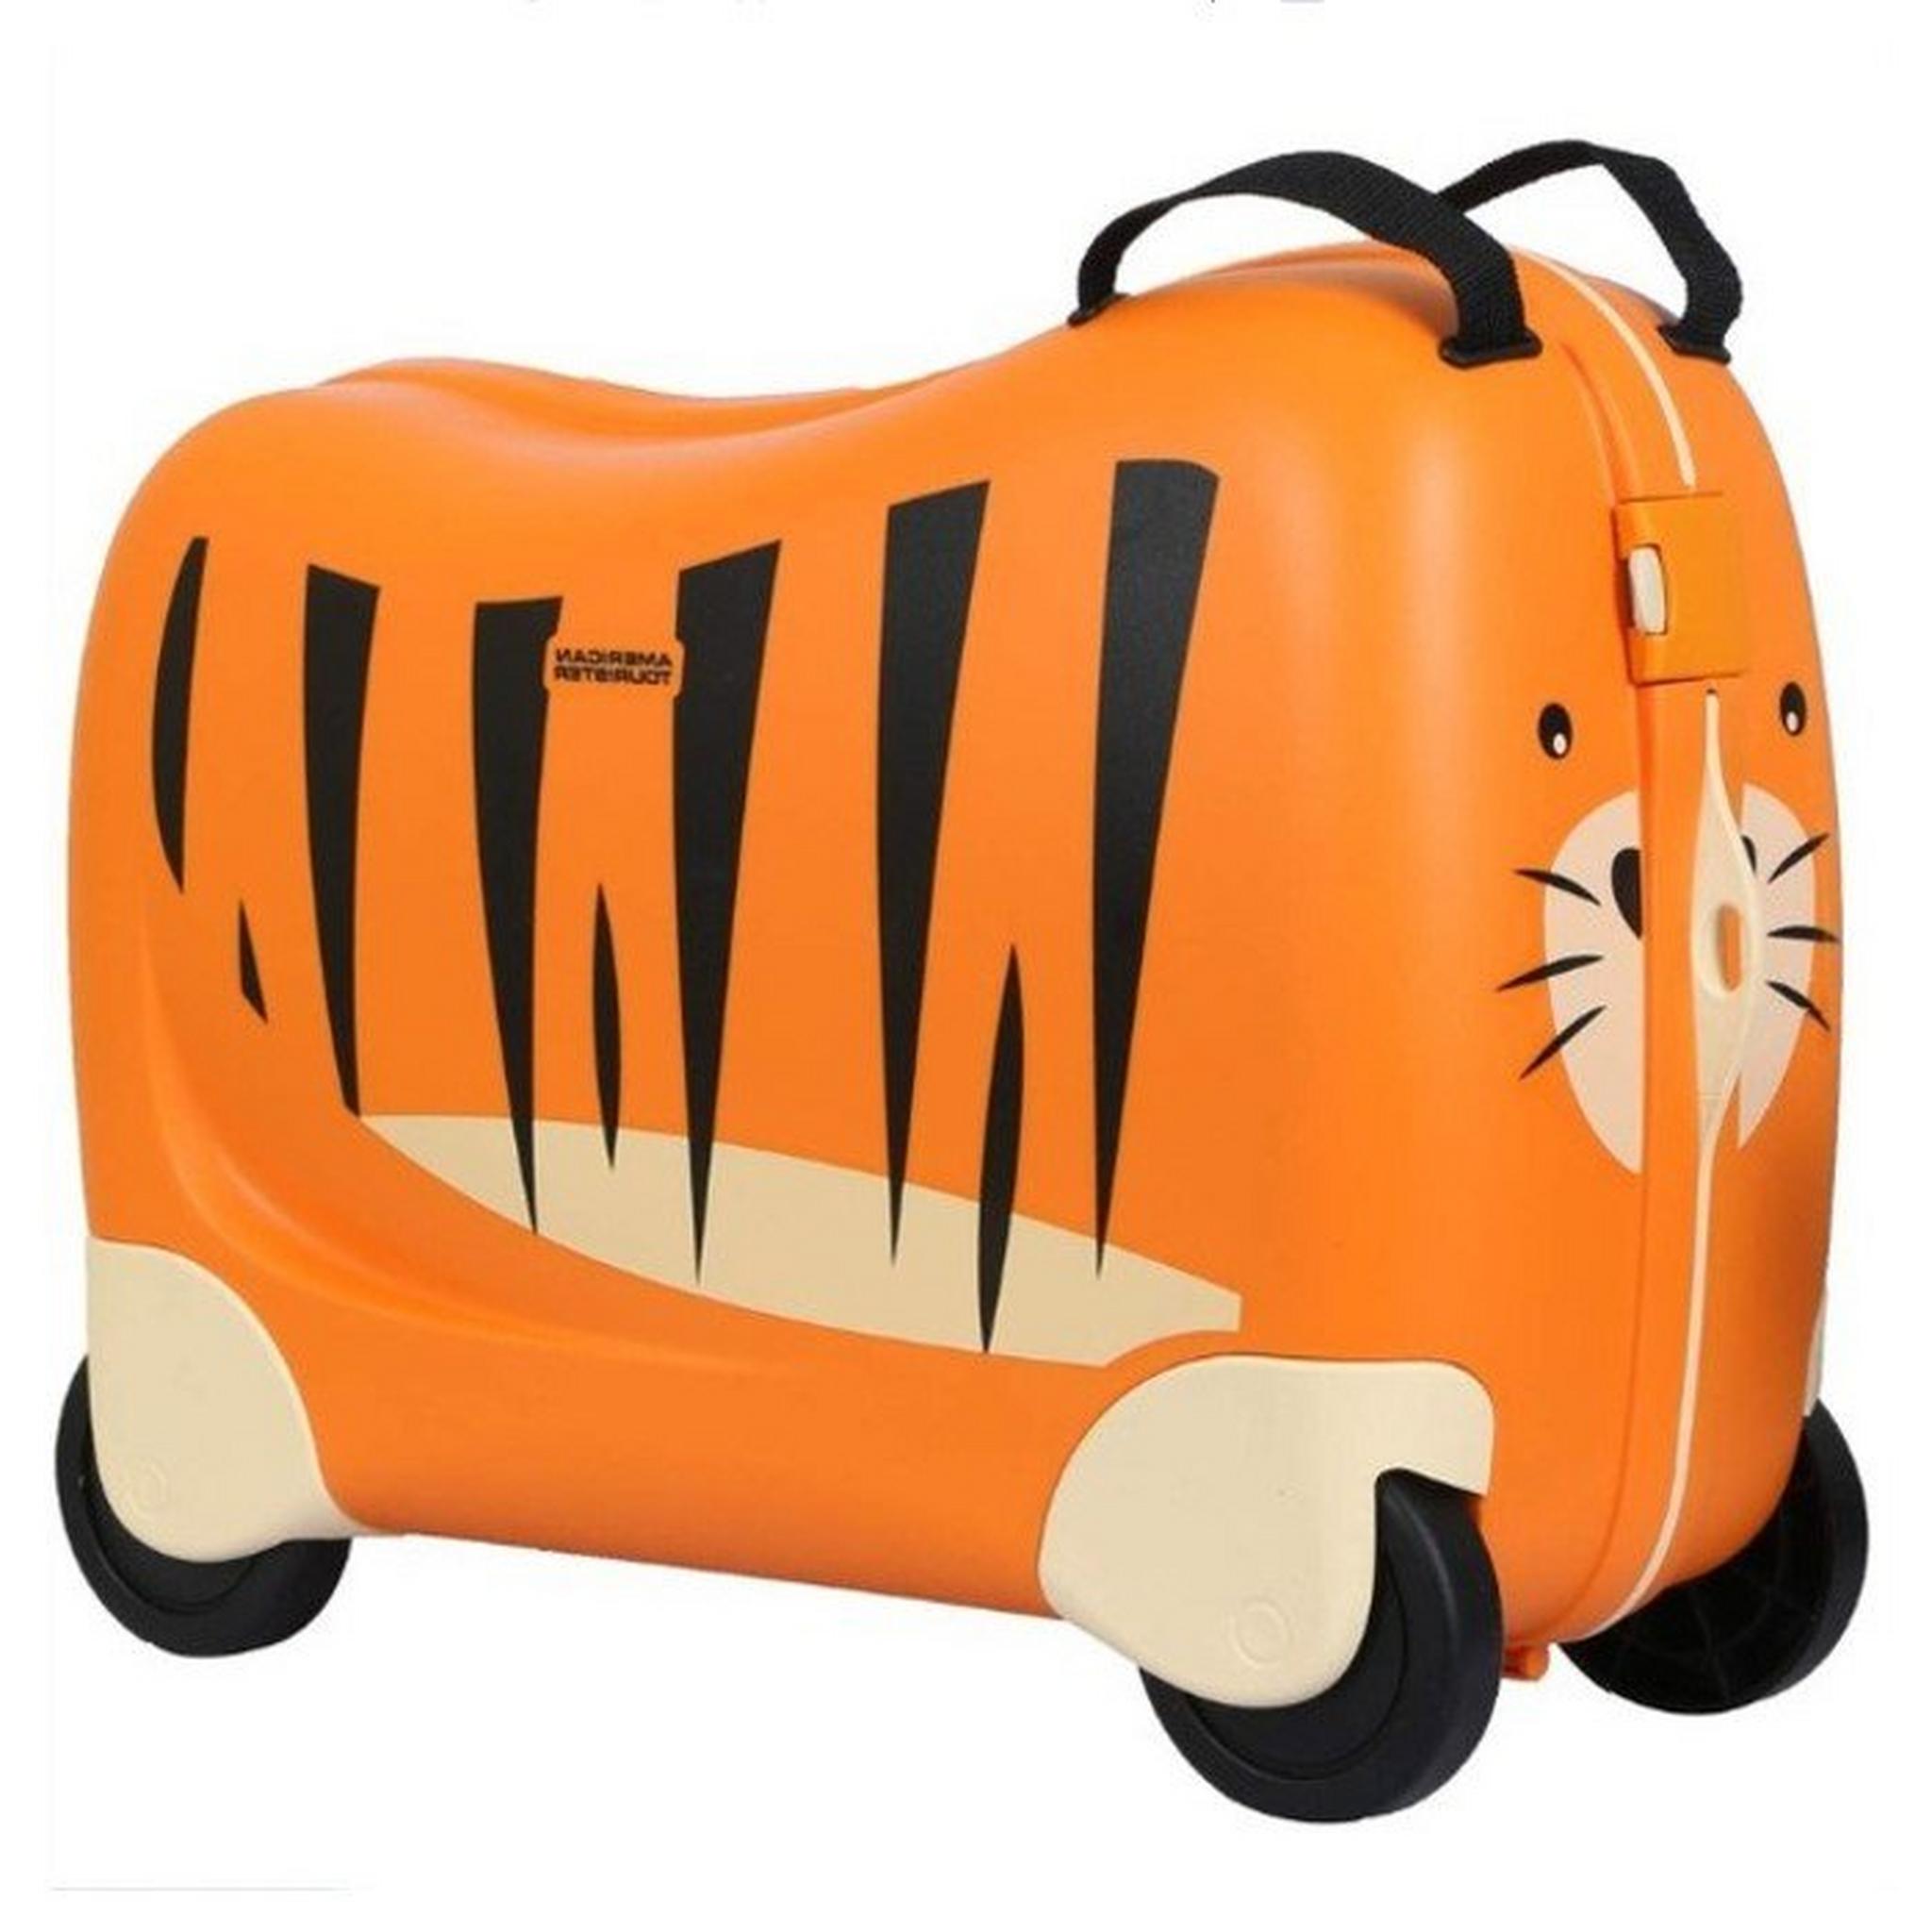 American Tourister Skittle Kids Trolley, 25 Liters, FH0X96011 – Orange Tiger Pattern